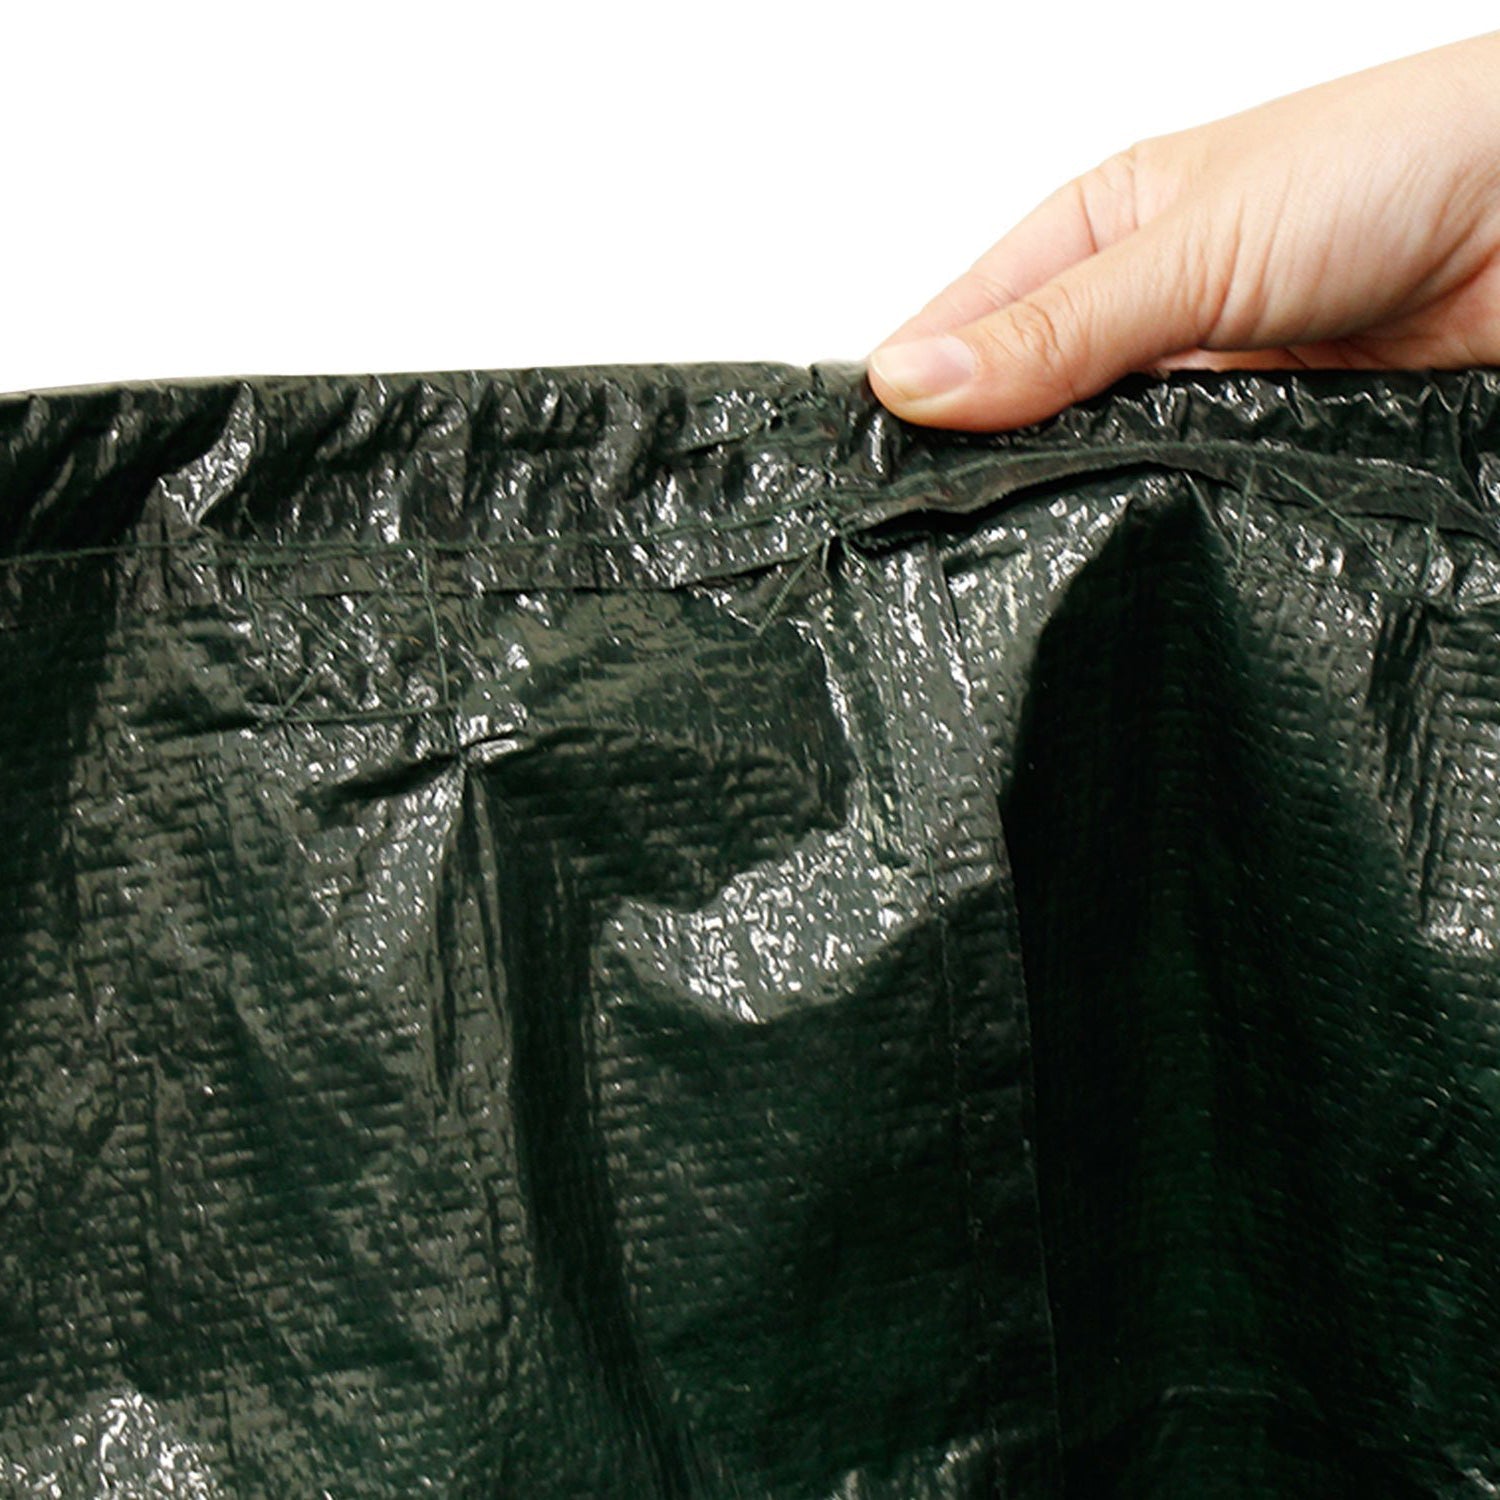 Collapsible Garden Bag Large Reusable Carry Handles Waste Bin Refuse Sack 90L x 2